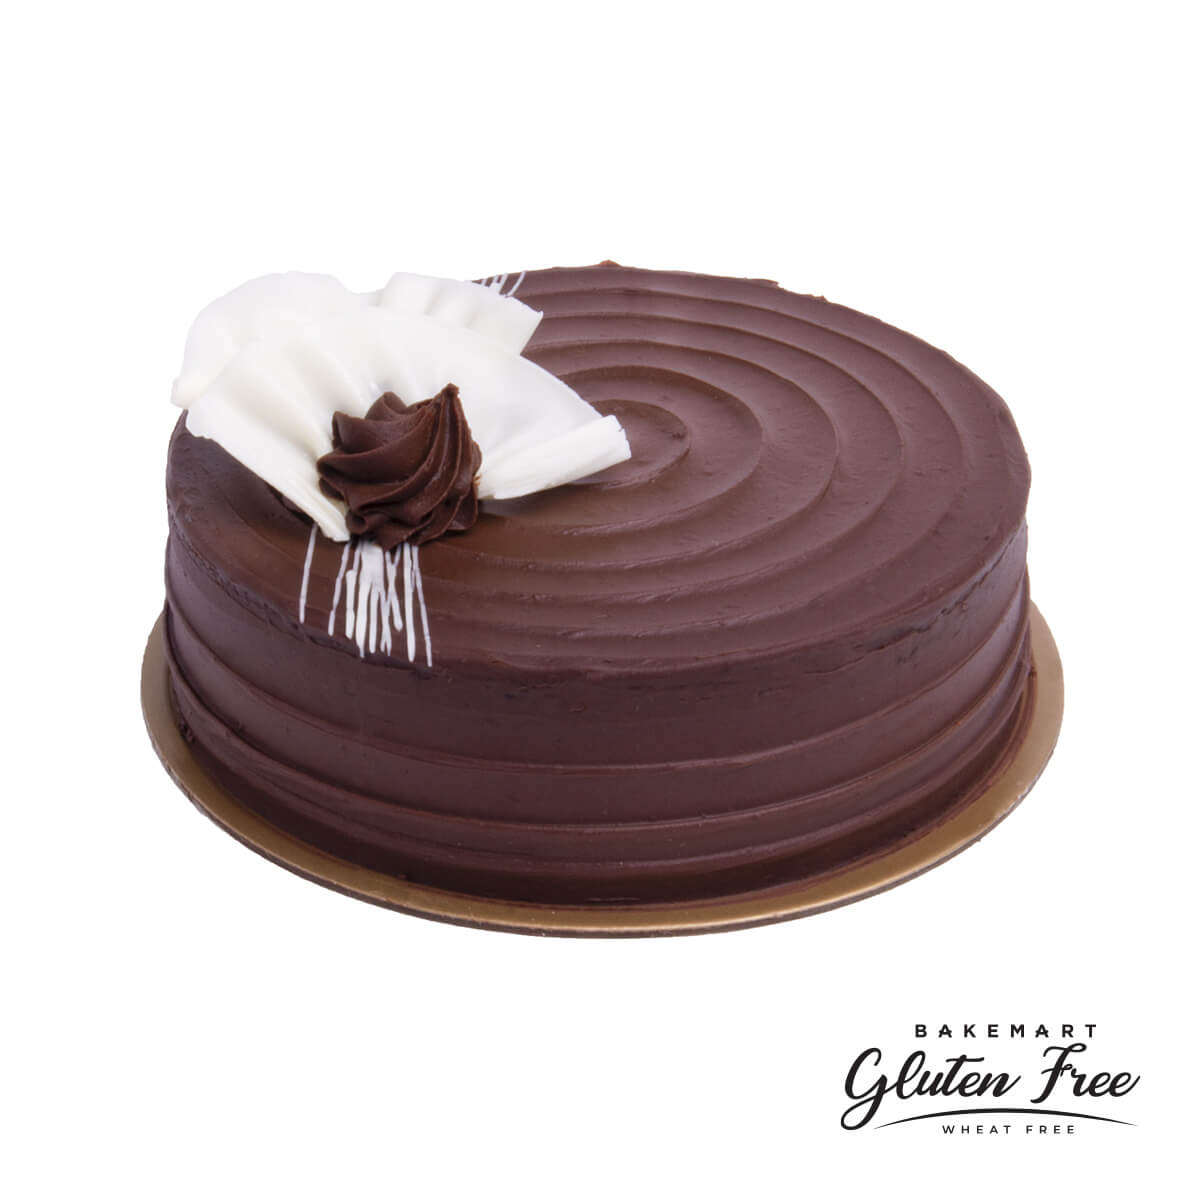 M382) Designer Birthday Cake (1 Kg). – Tricity 24